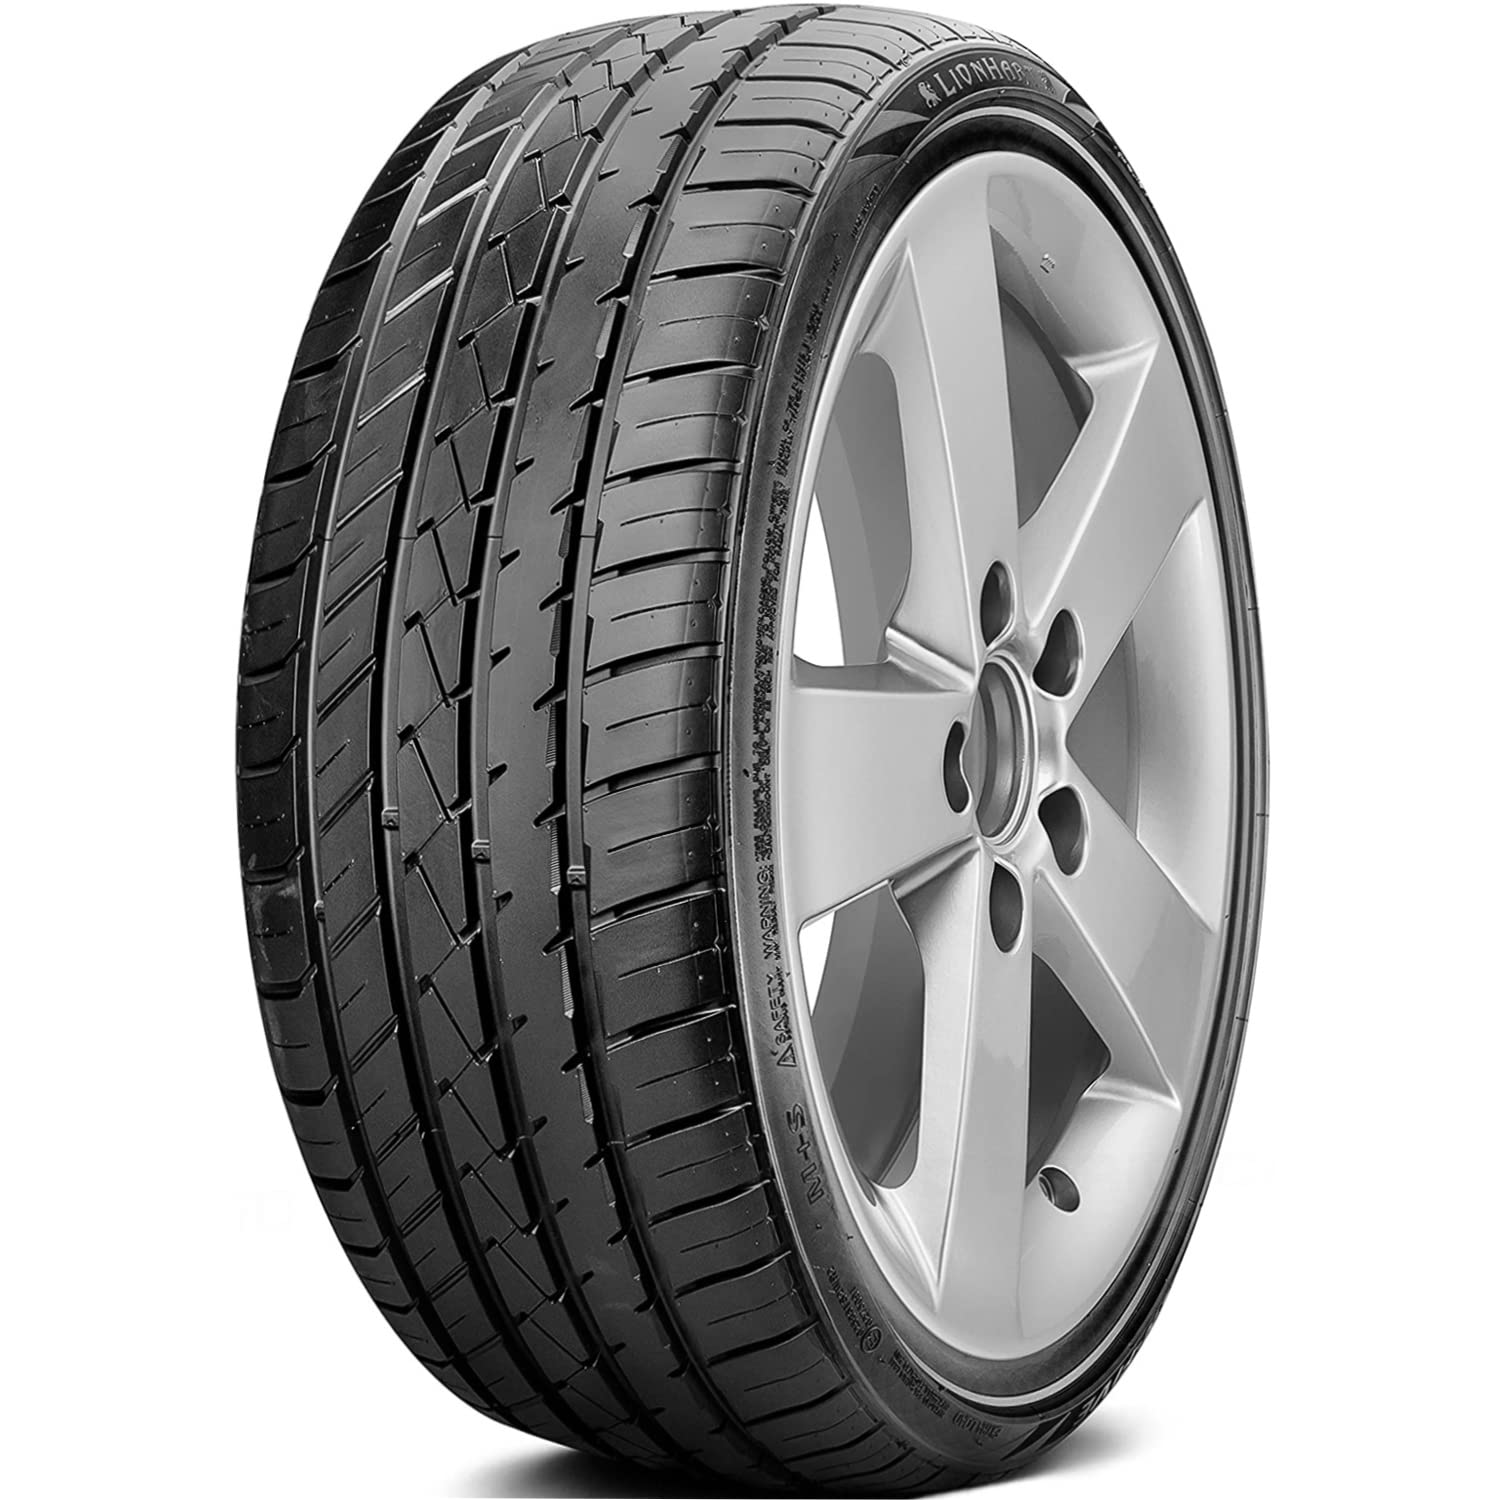 LIONHART LH-FIVE 235/30ZR20 (25.6X9.3R 20) Tires